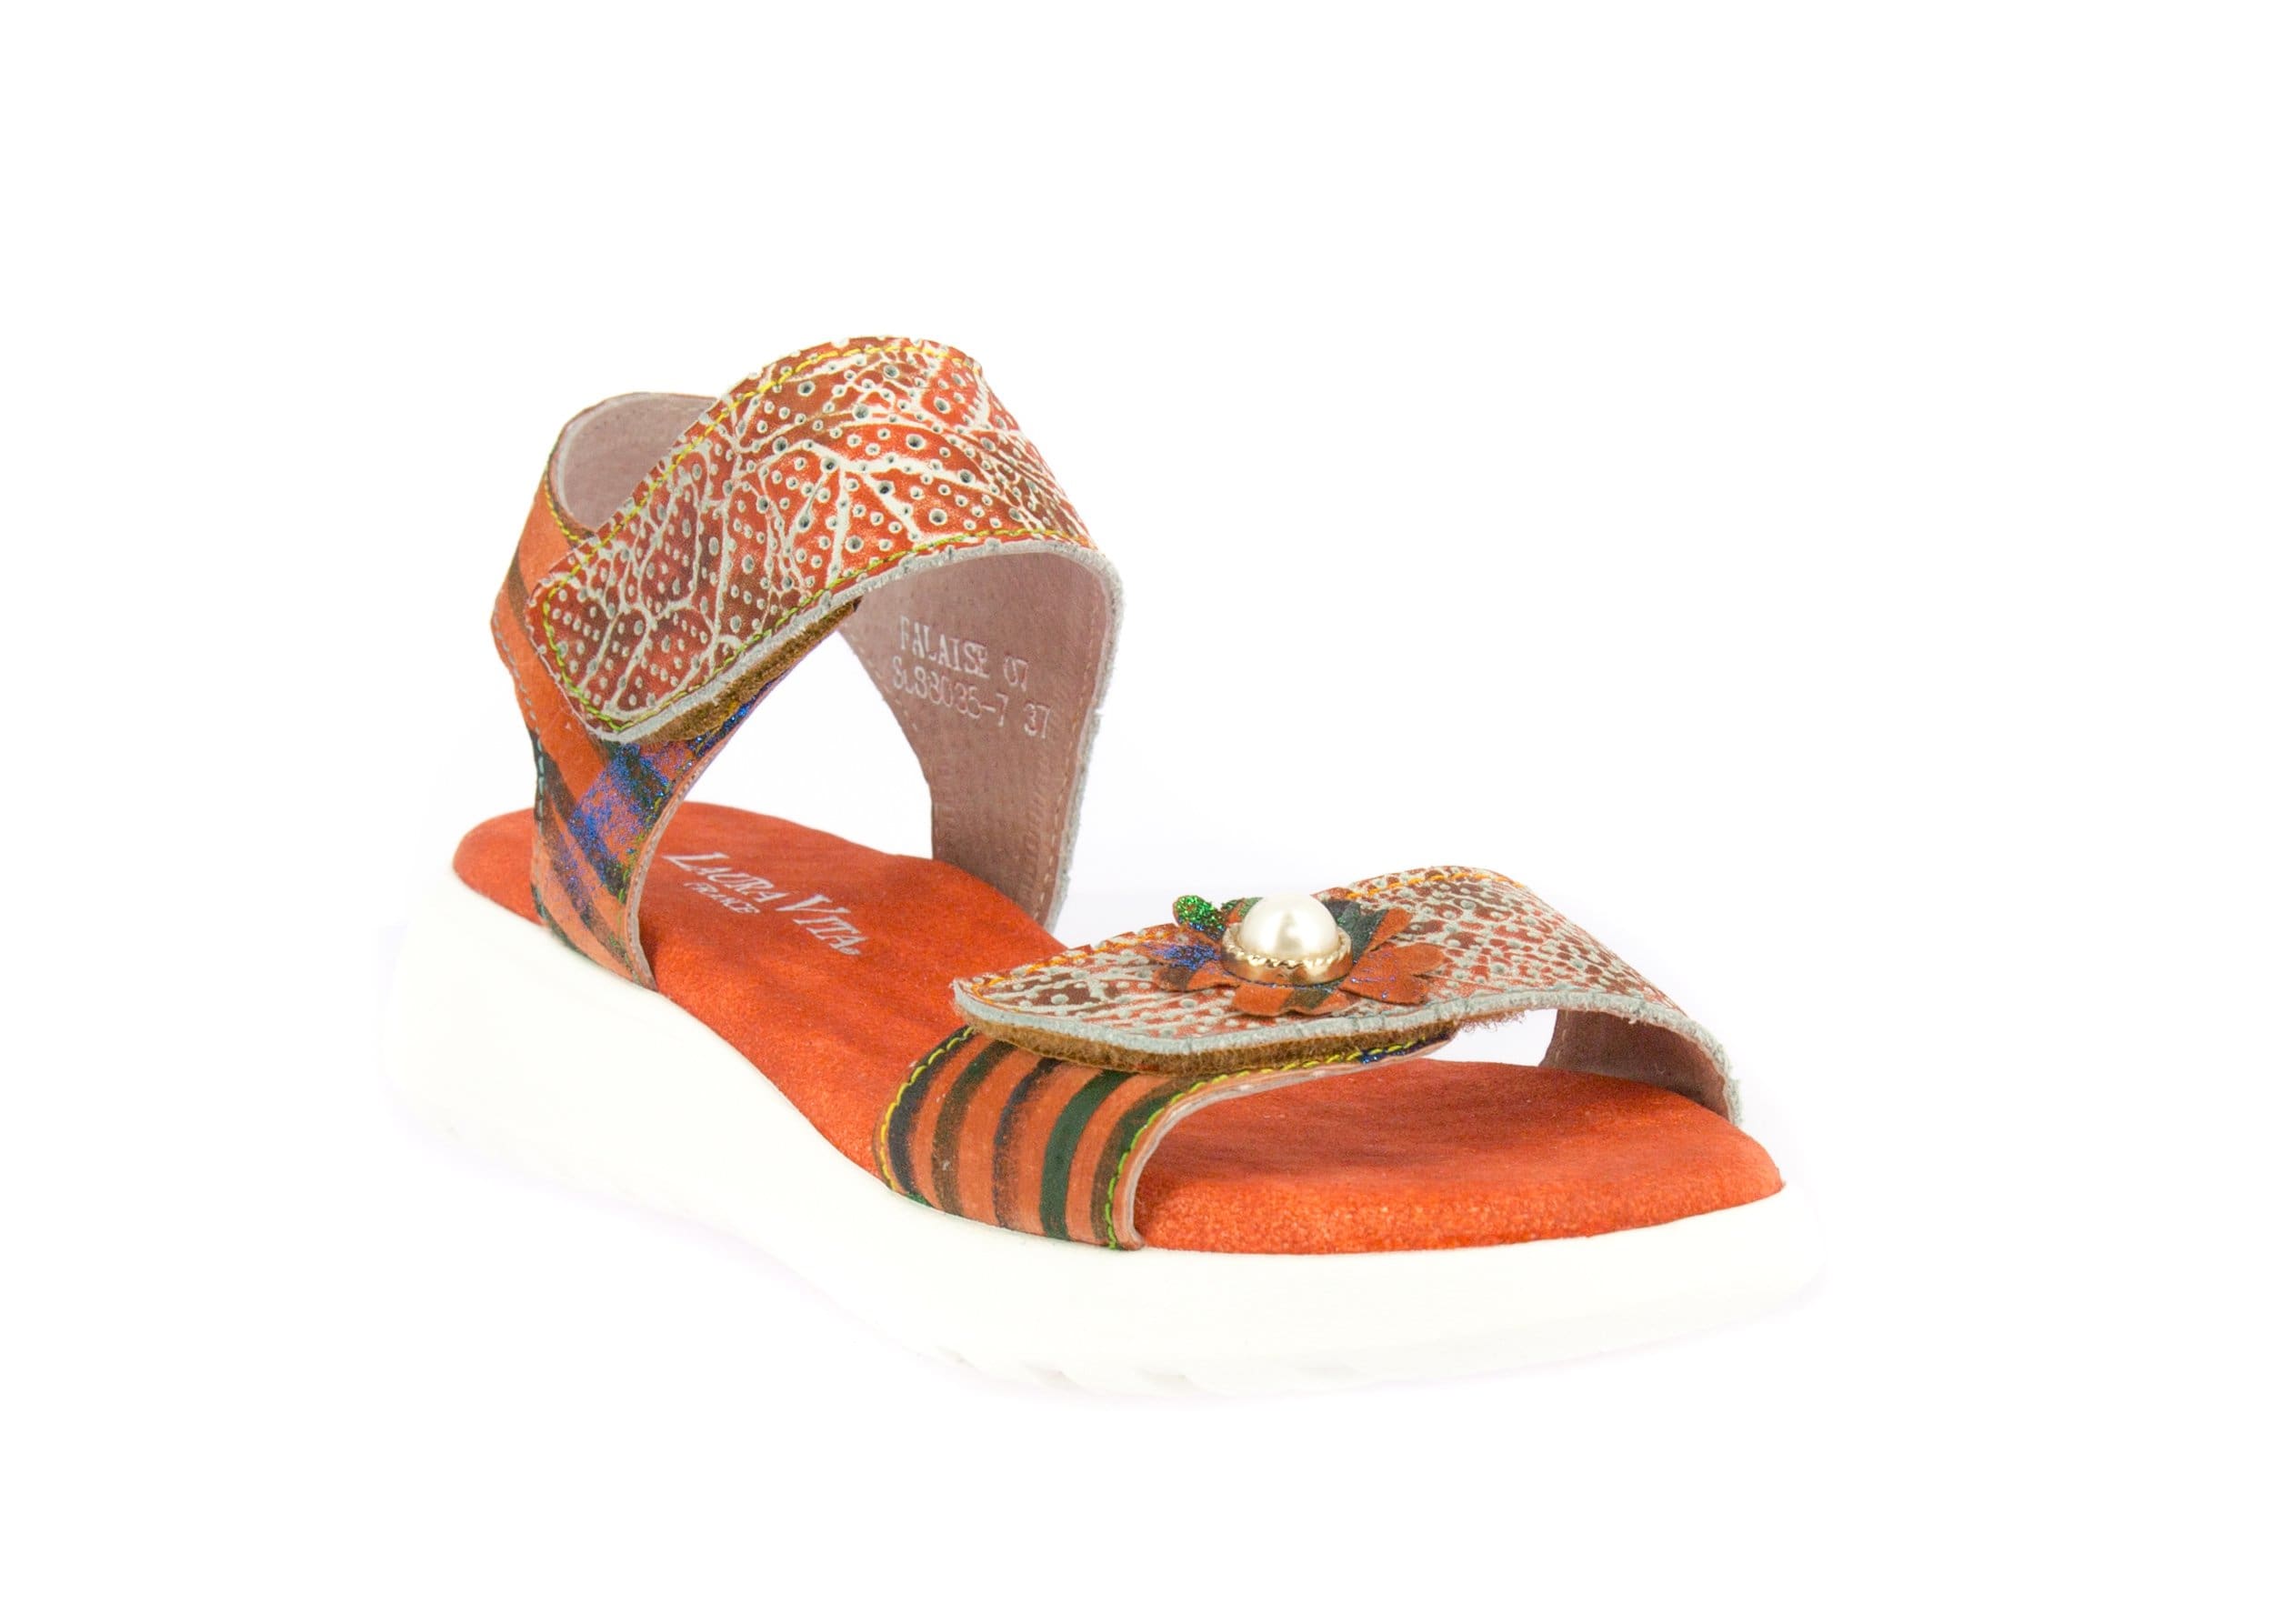 Chaussure FACLAISEO07 - Sandale